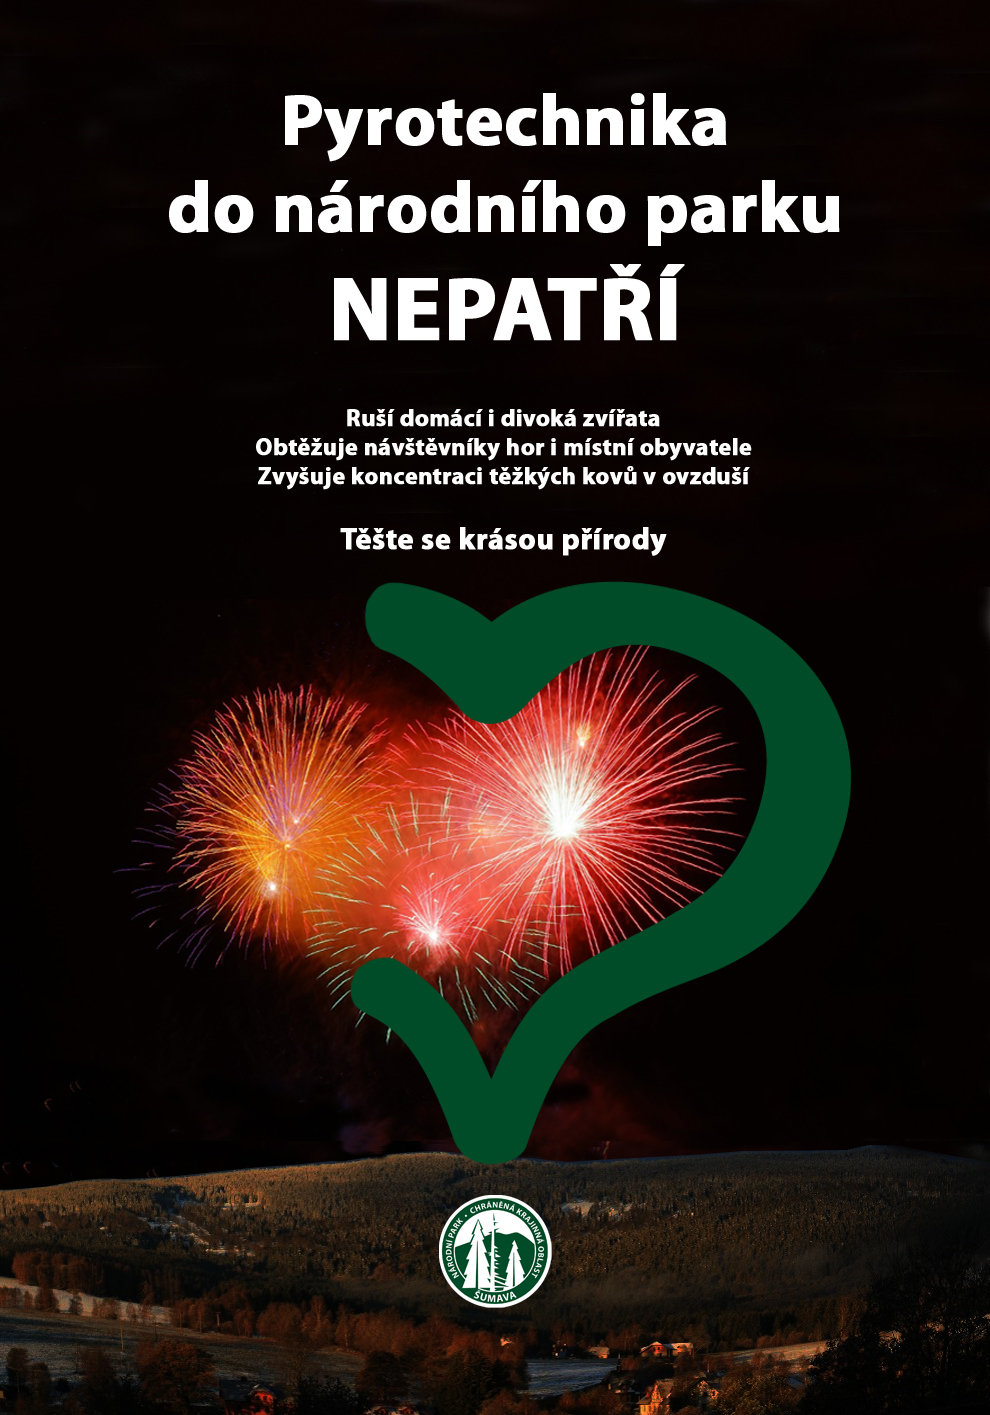 2017 plakátek pyrotechnika do NP nepatri.jpg